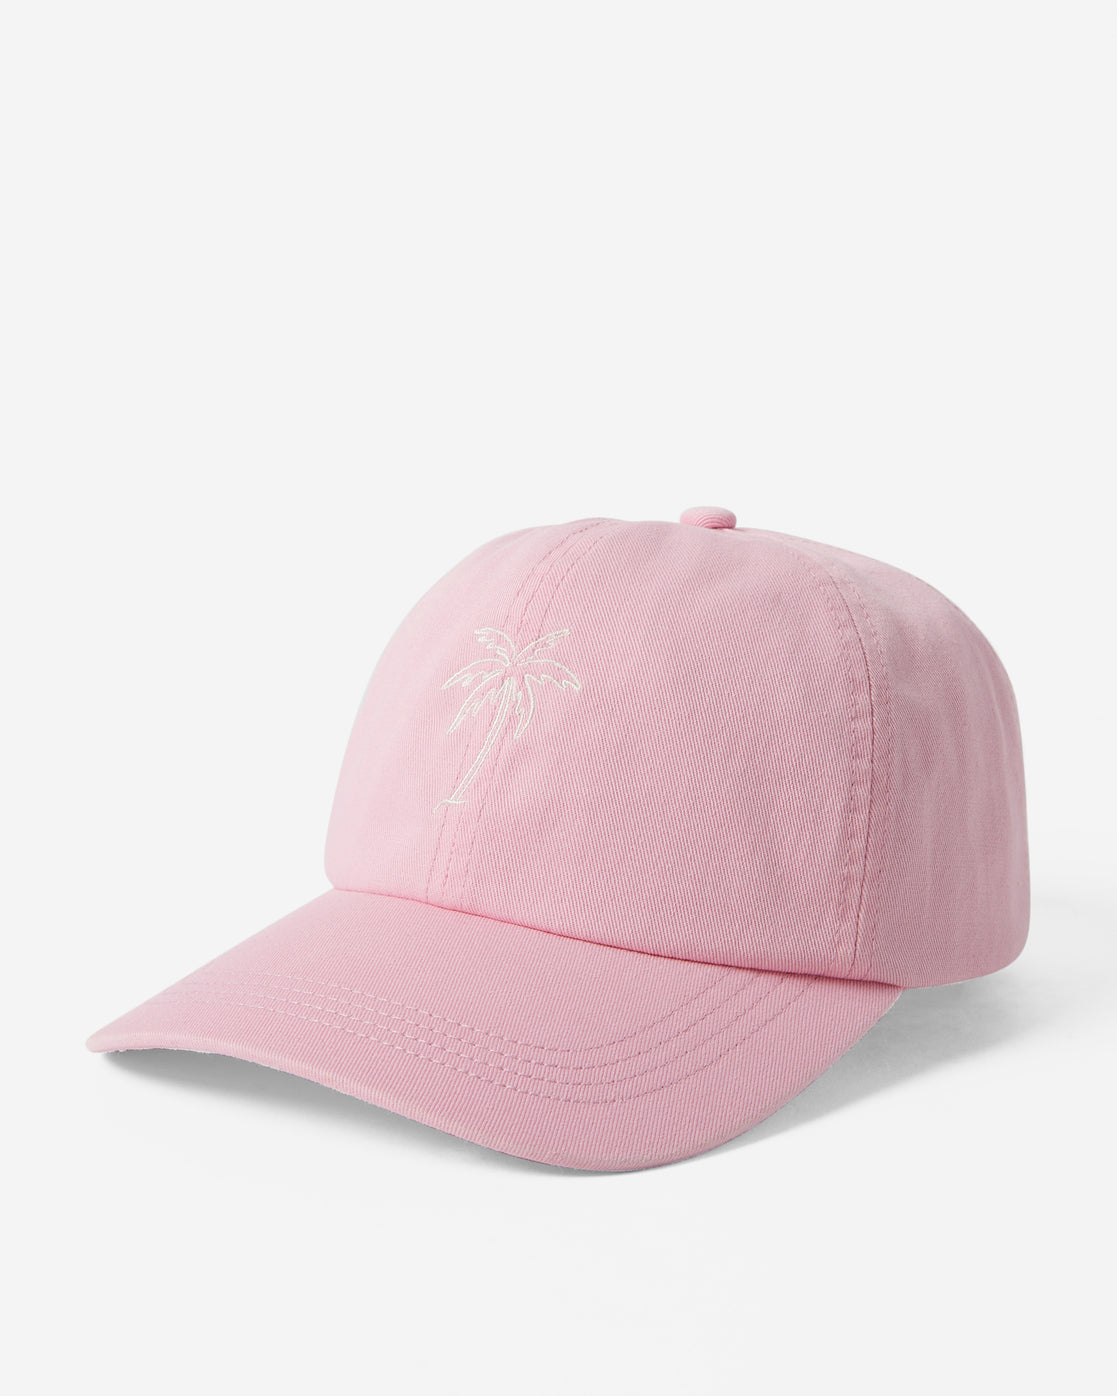 Dad Cap Strapback Hat - Light Pink Trails